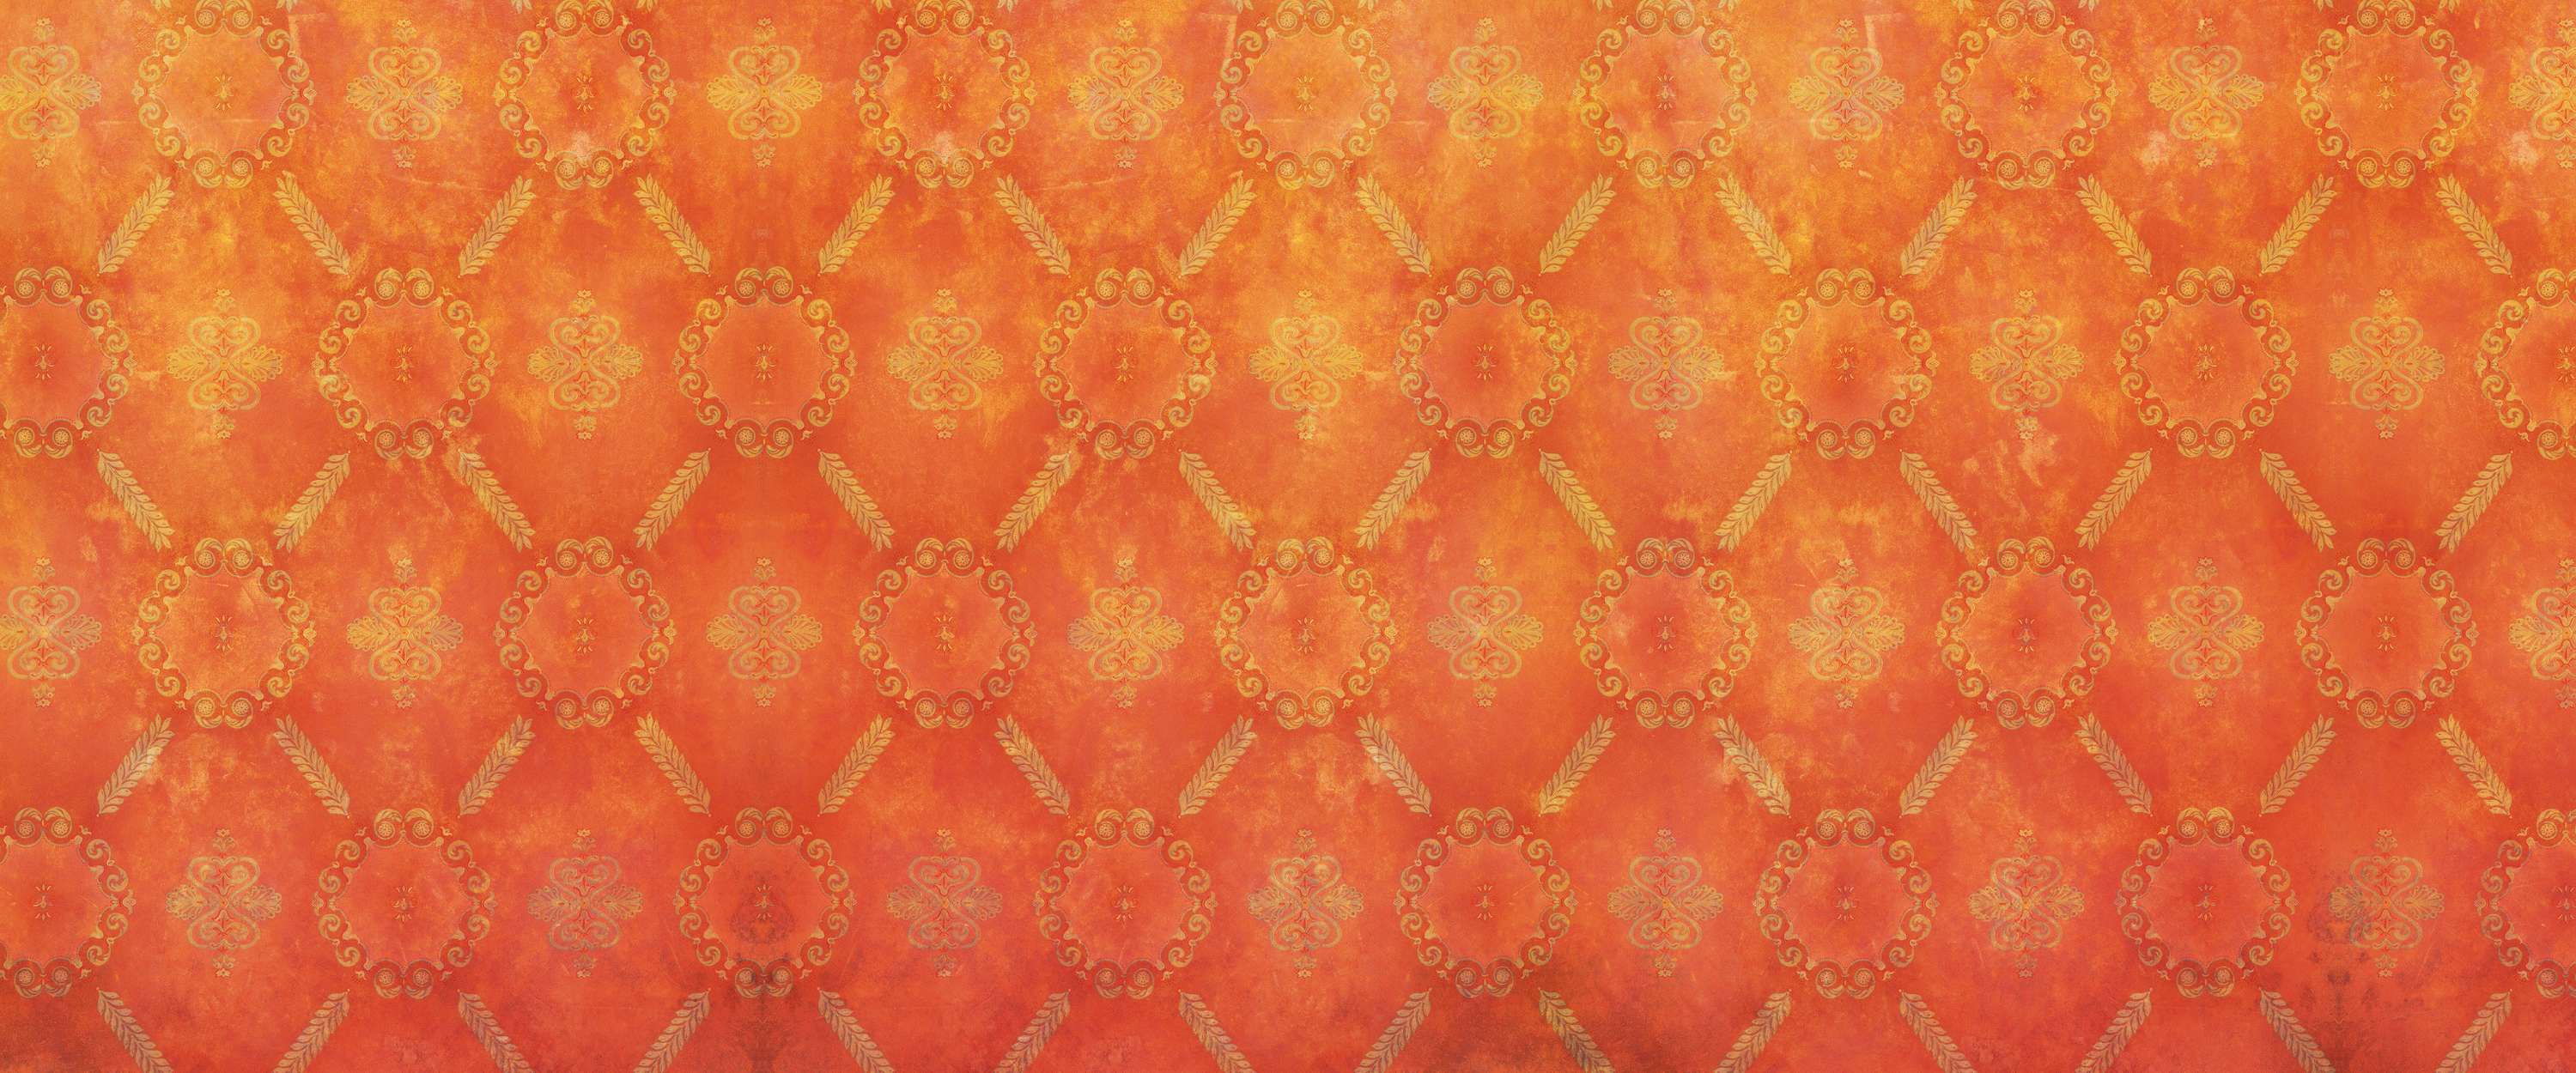             Orange Fototapete mit Ornament Muster & Used Look
        